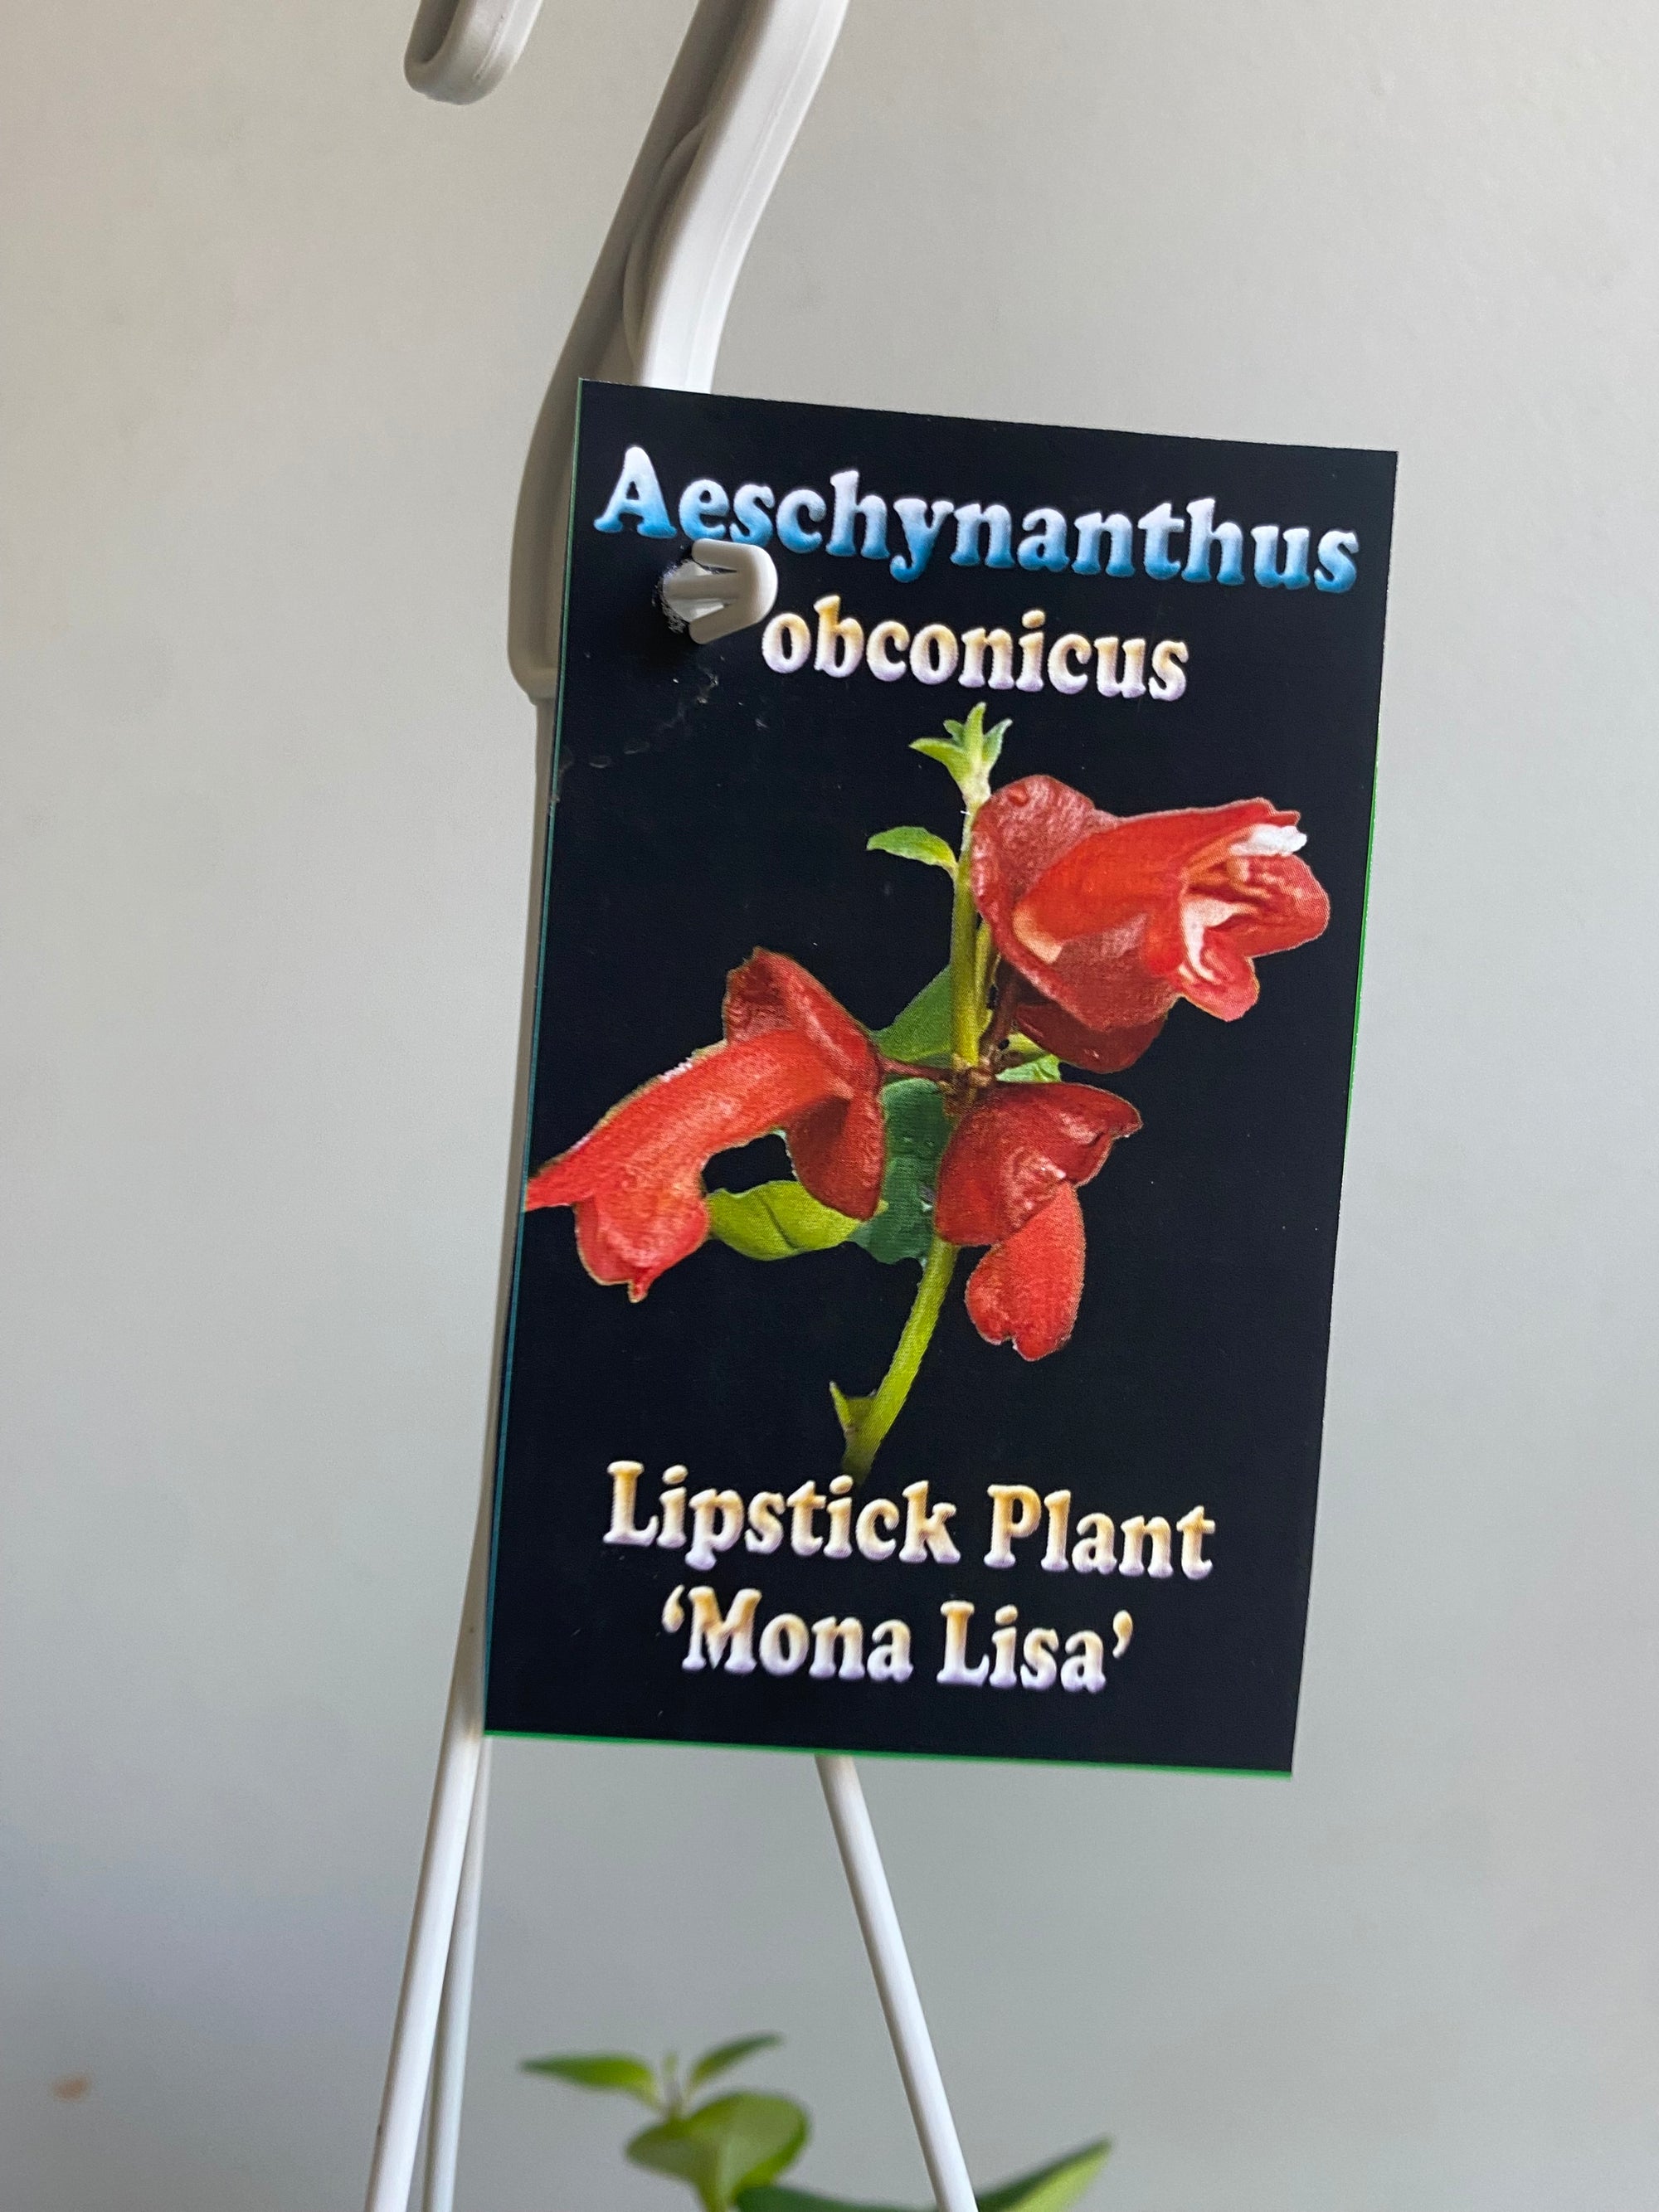 Lipstick Plant - Aeschynanthus obconicus 'Mona Lisa' (New Release)